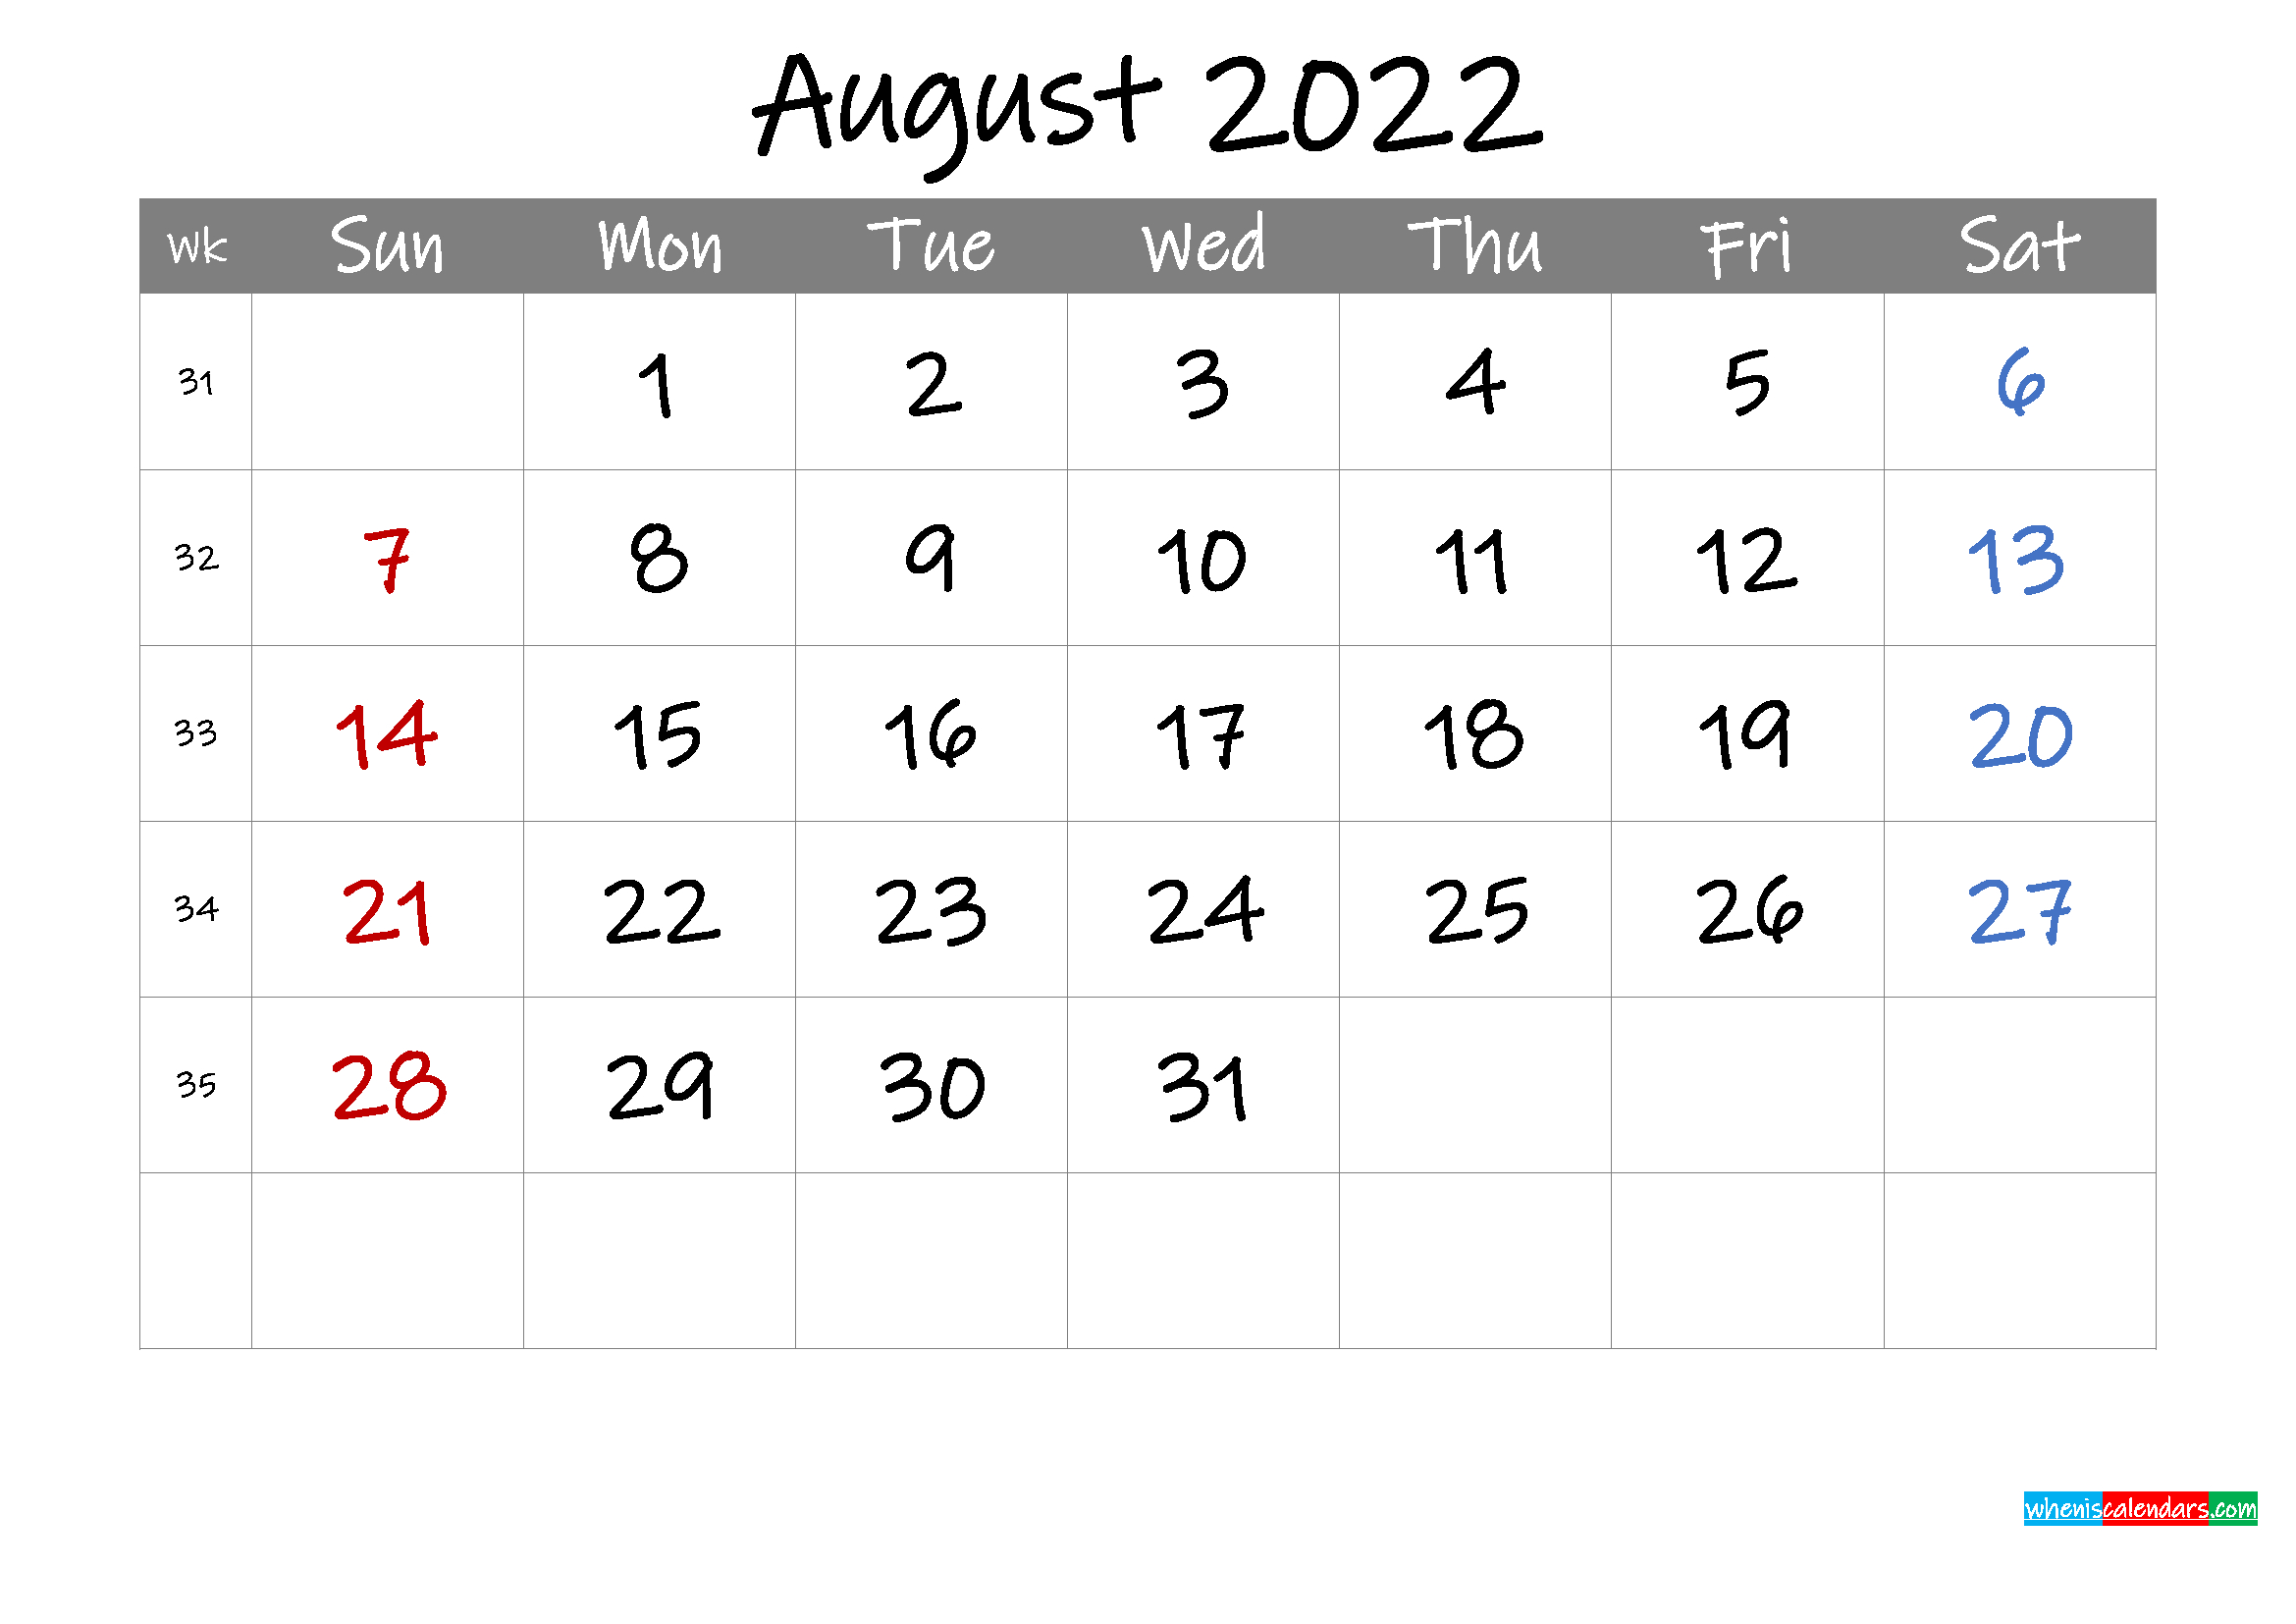 Catch 2022 Calendar For August